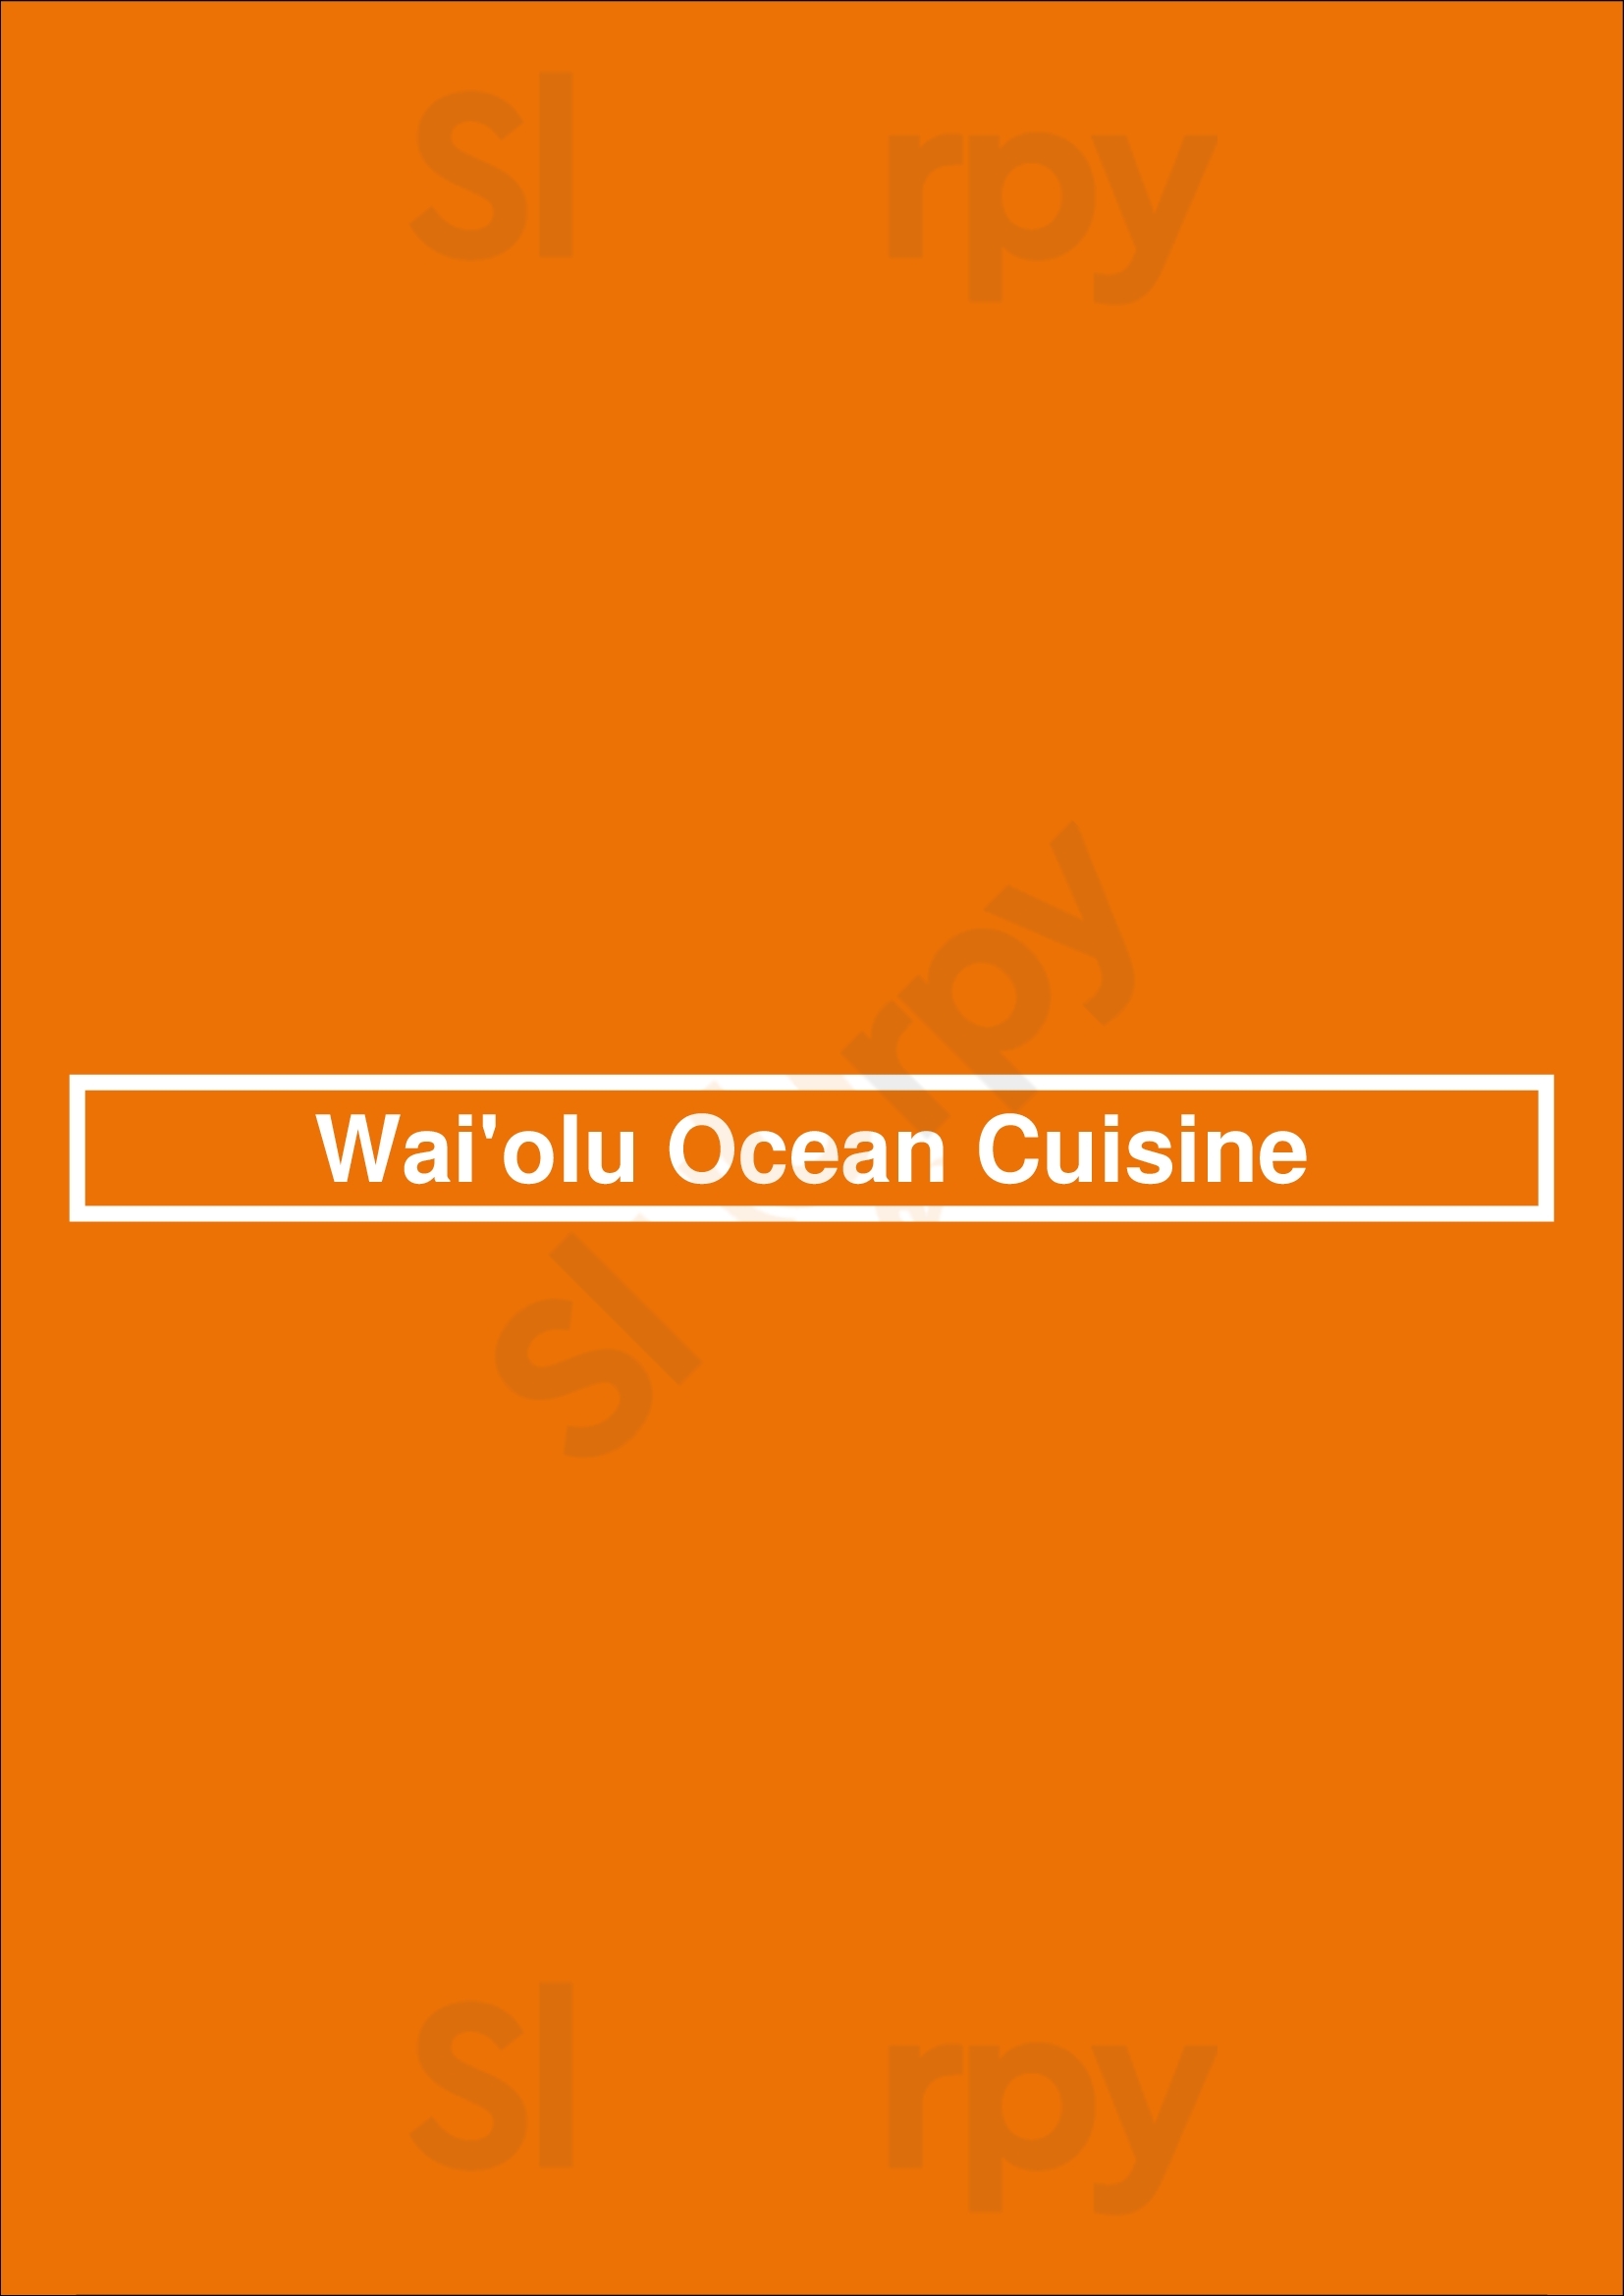 Wai'olu Ocean Cuisine Honolulu Menu - 1